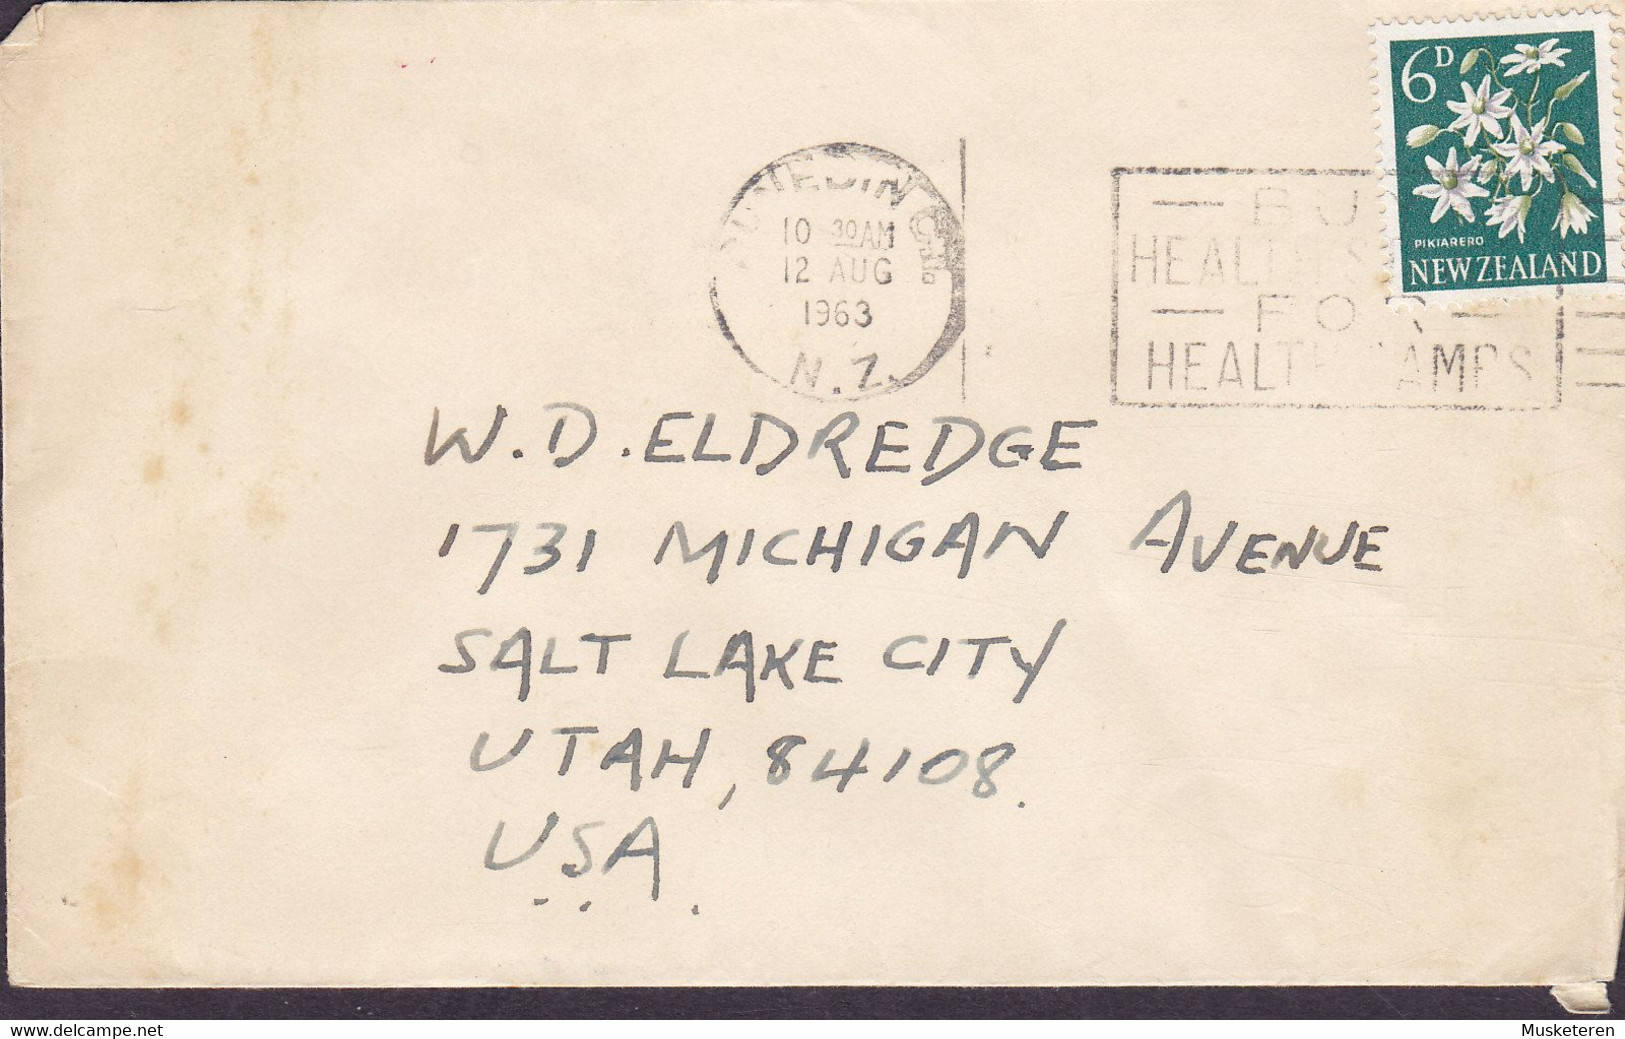 New Zealand Slogan Flamme 'Health Stamps' DUNEDIN 1963 'Petite' Cover Brief SALT LAKE CITY Utah United States - Covers & Documents